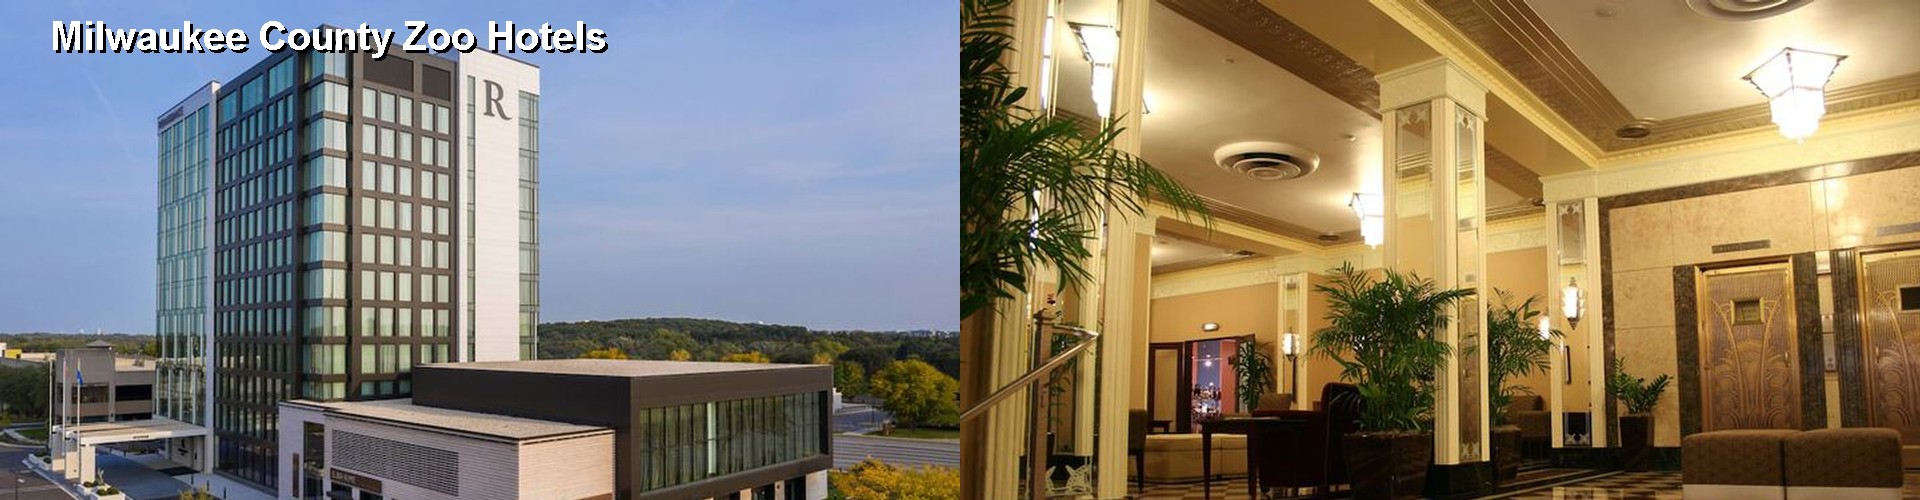 4 Best Hotels near Milwaukee County Zoo